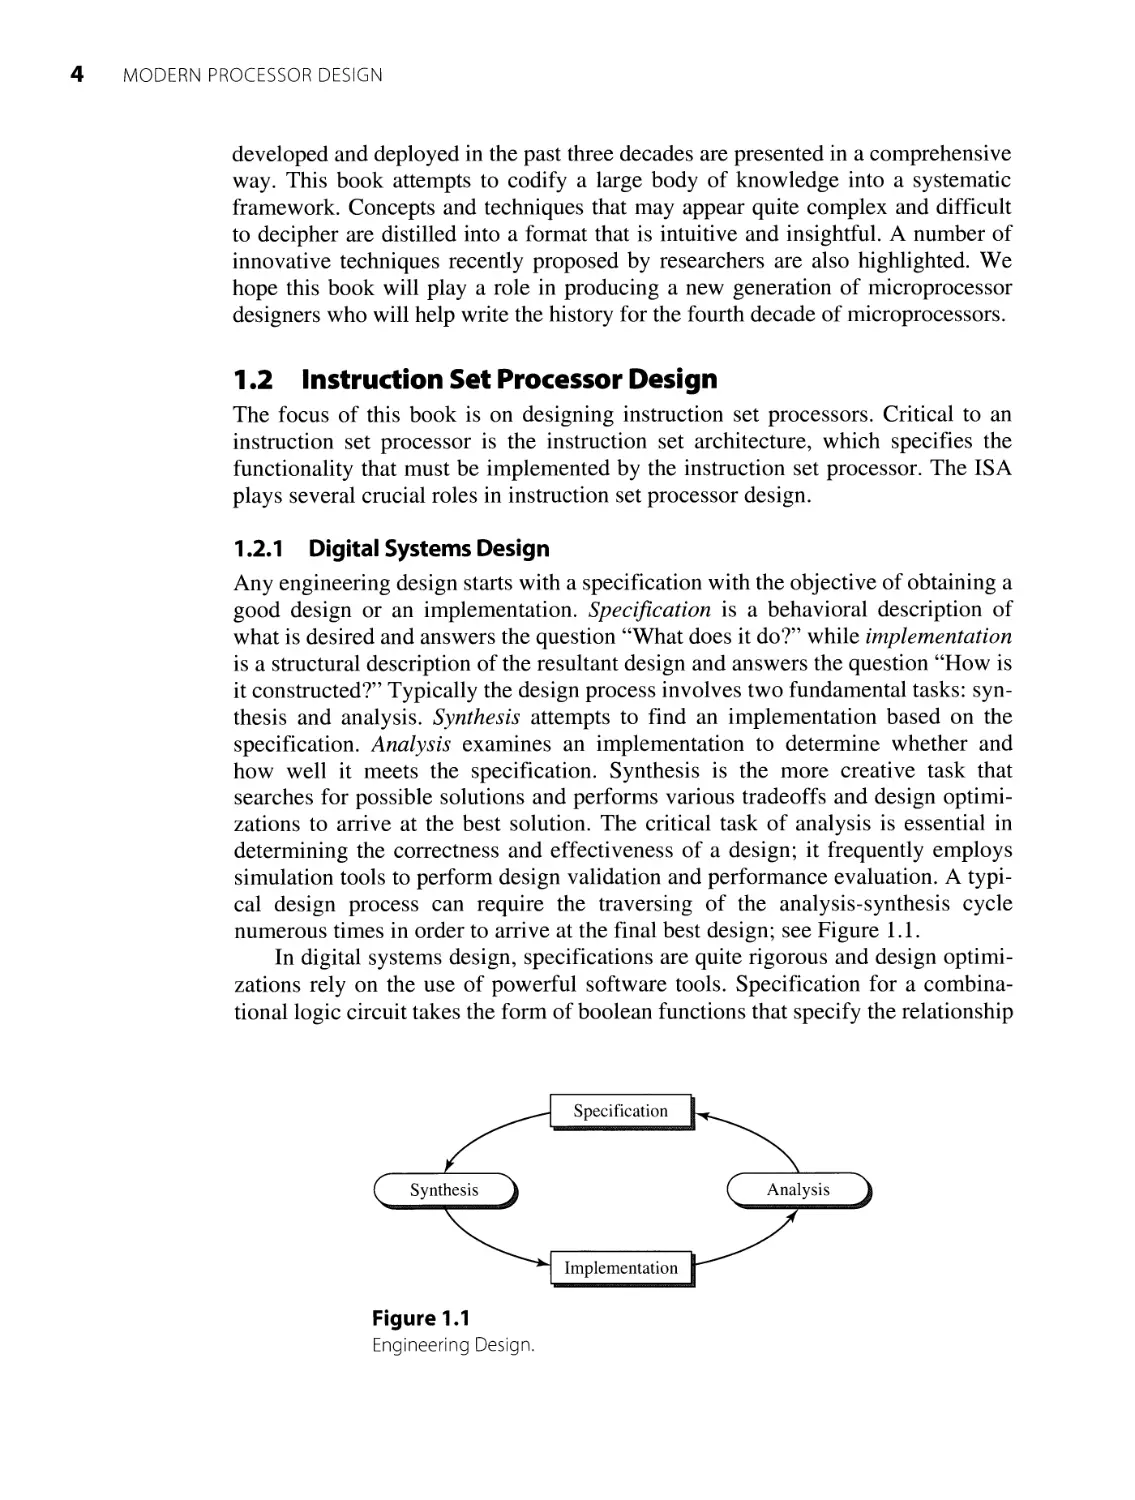 1.2 Instruction Set Processor Design
1.2.1 Digital Systems Design